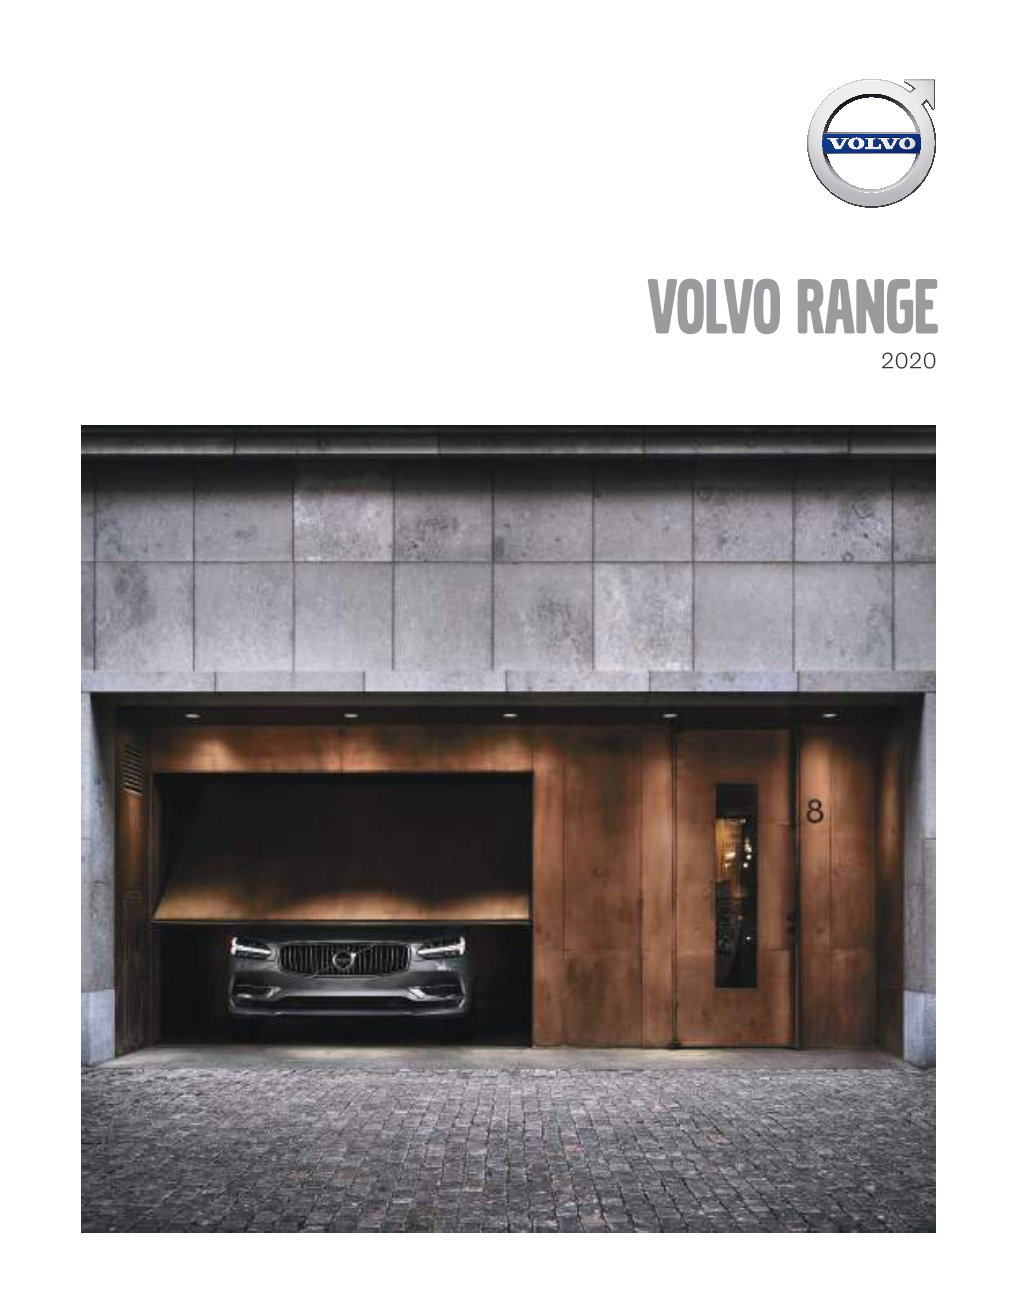 Volvo Range 2020 T:11”